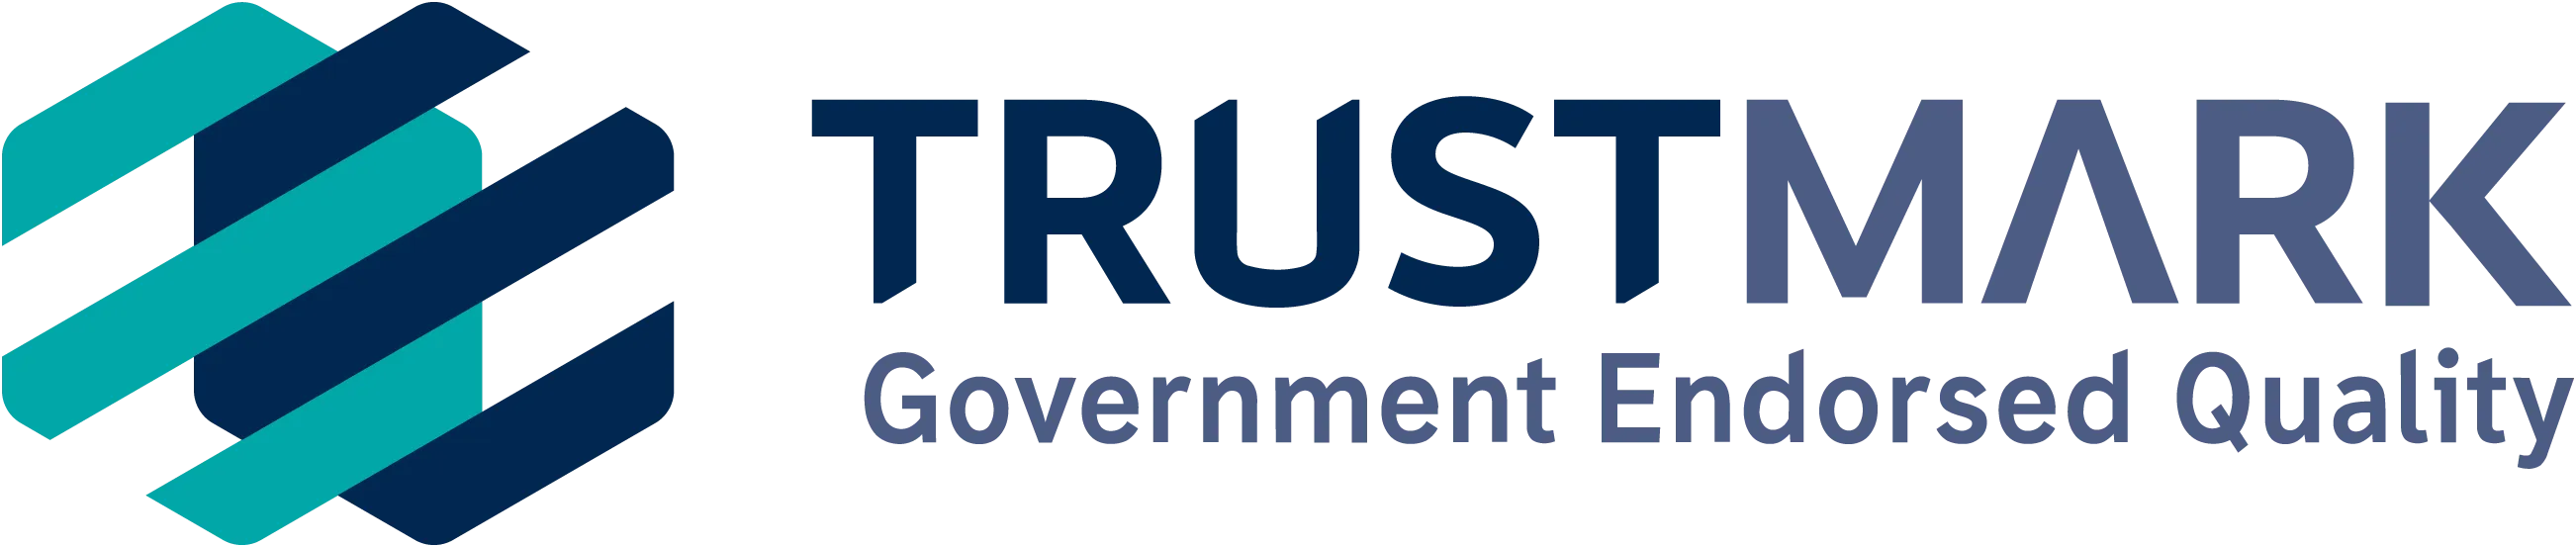 trust mark logo